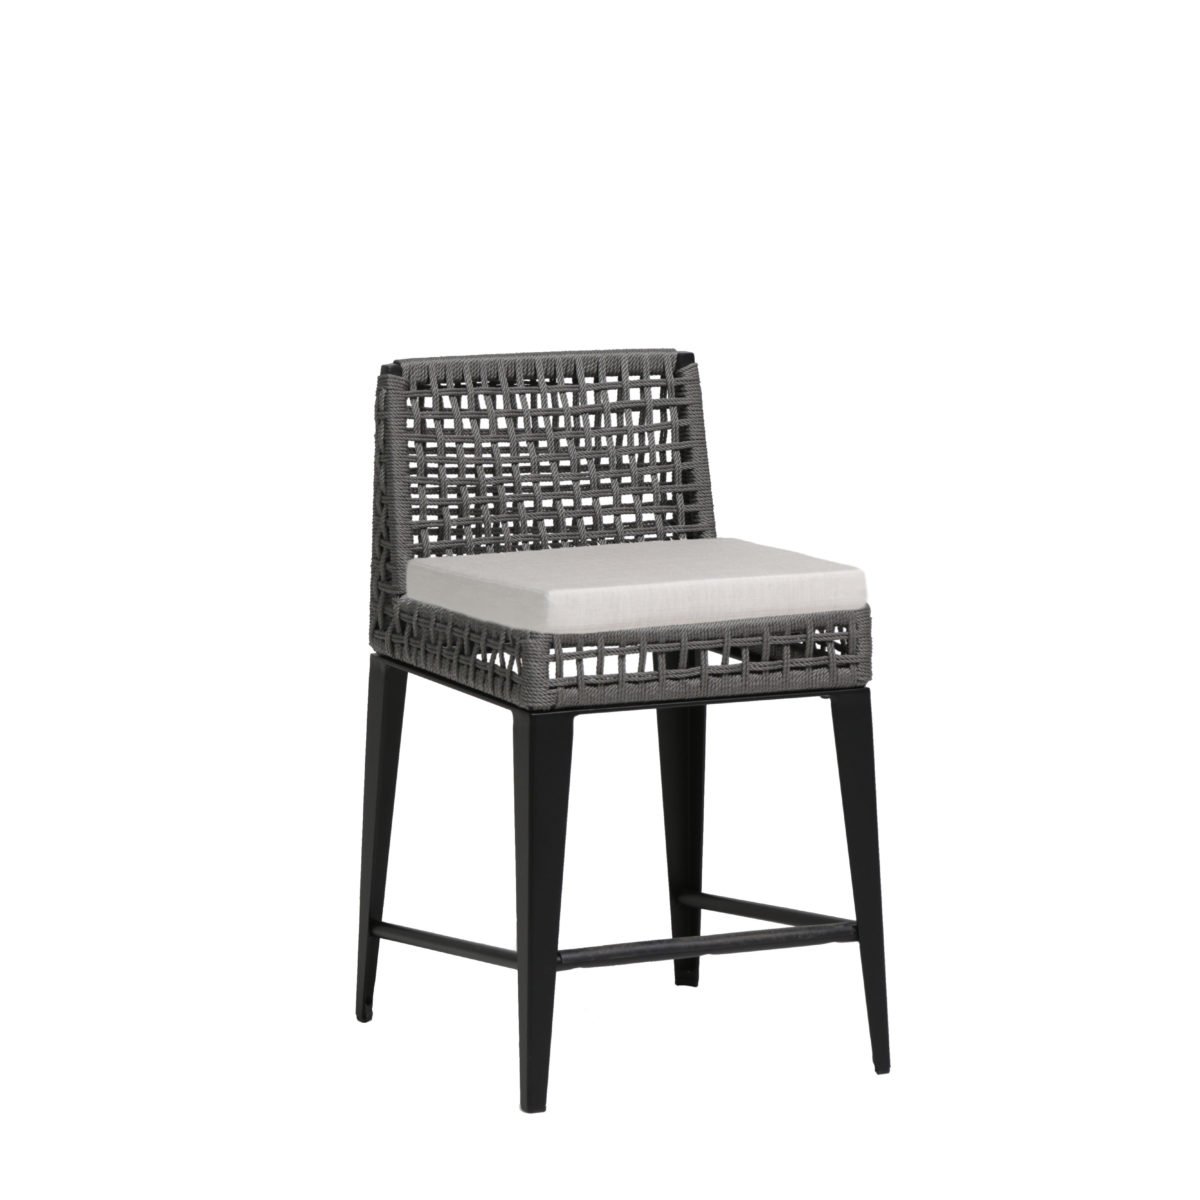 Genval-Counter-Chair-Angle-1-e1599847309351-1200x1200.jpg